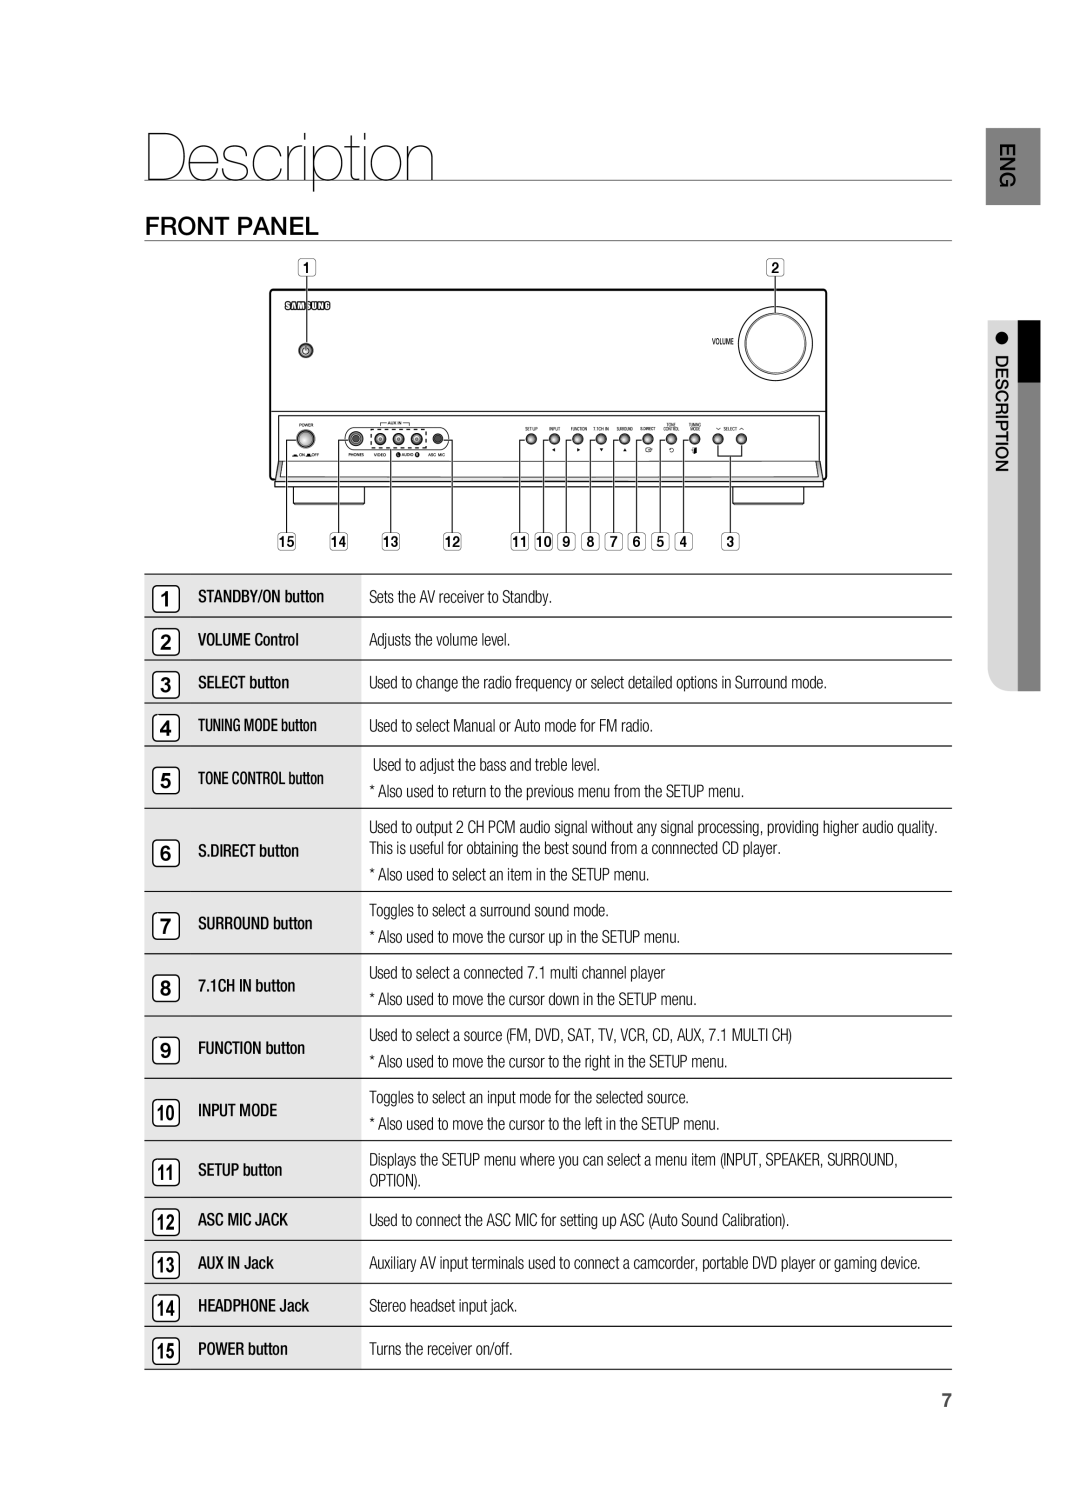 Samsung HT-AS730ST user manual Description, Front Panel 